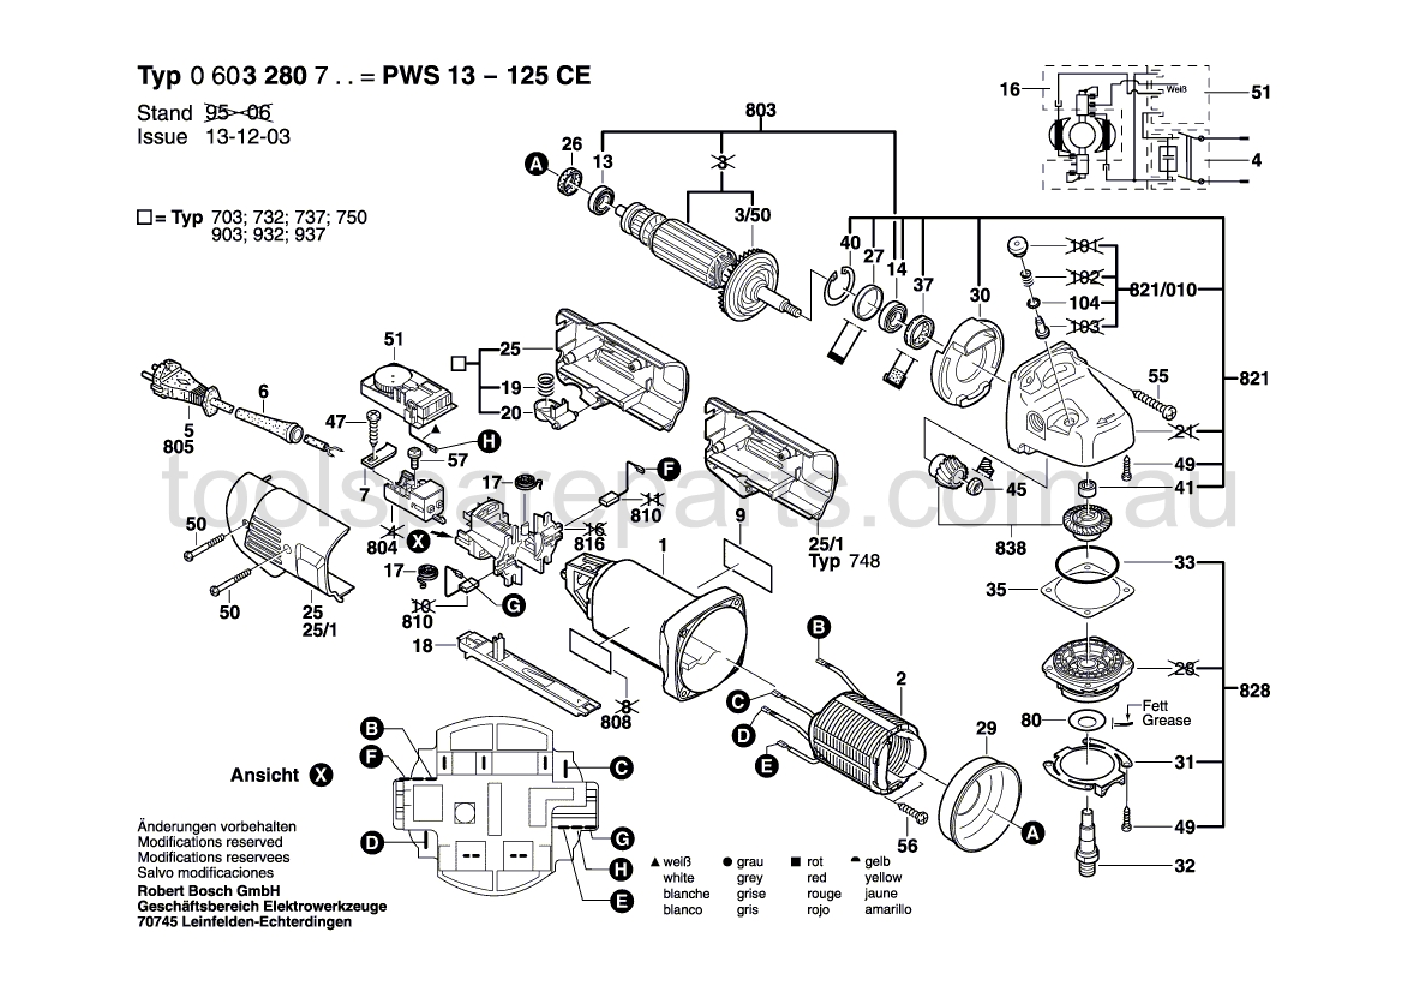 Bosch PWS 13-125 CE 0603280737  Diagram 1